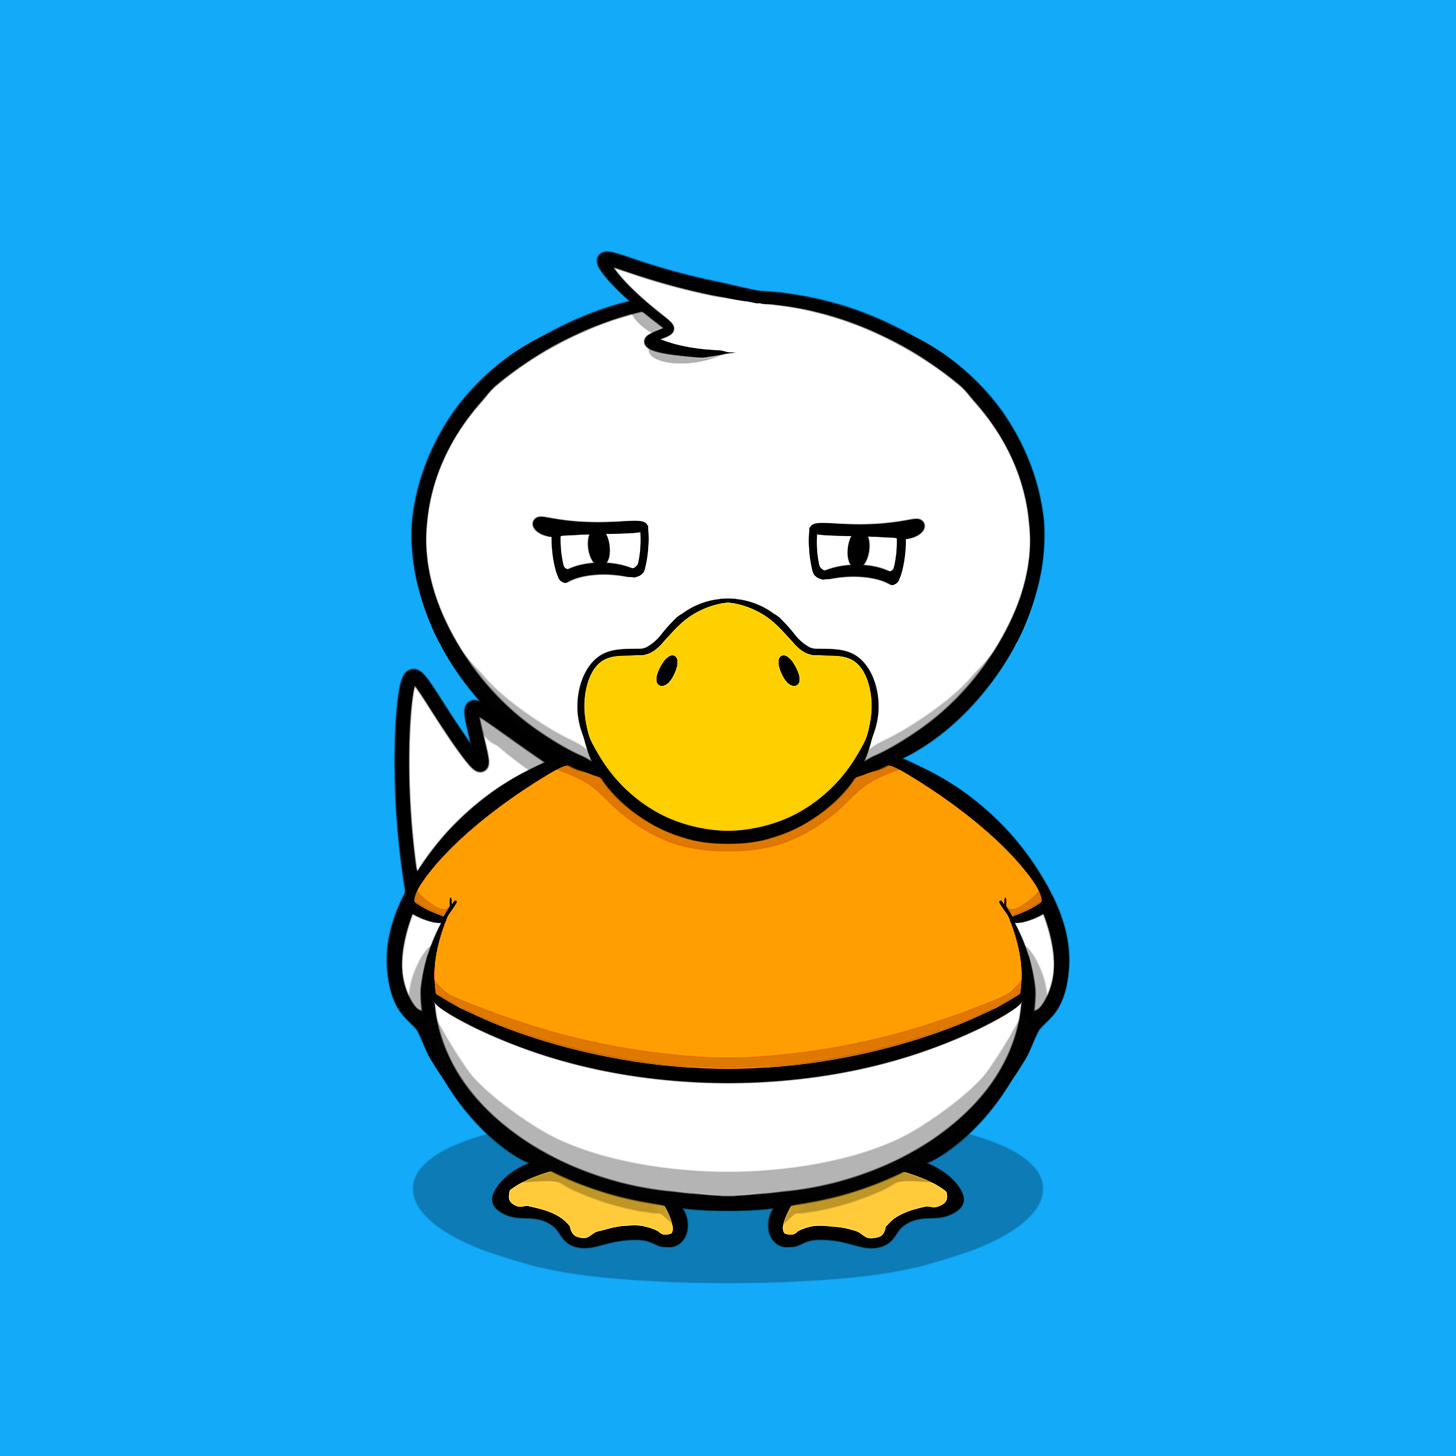 A grumpy duck on a blue background.